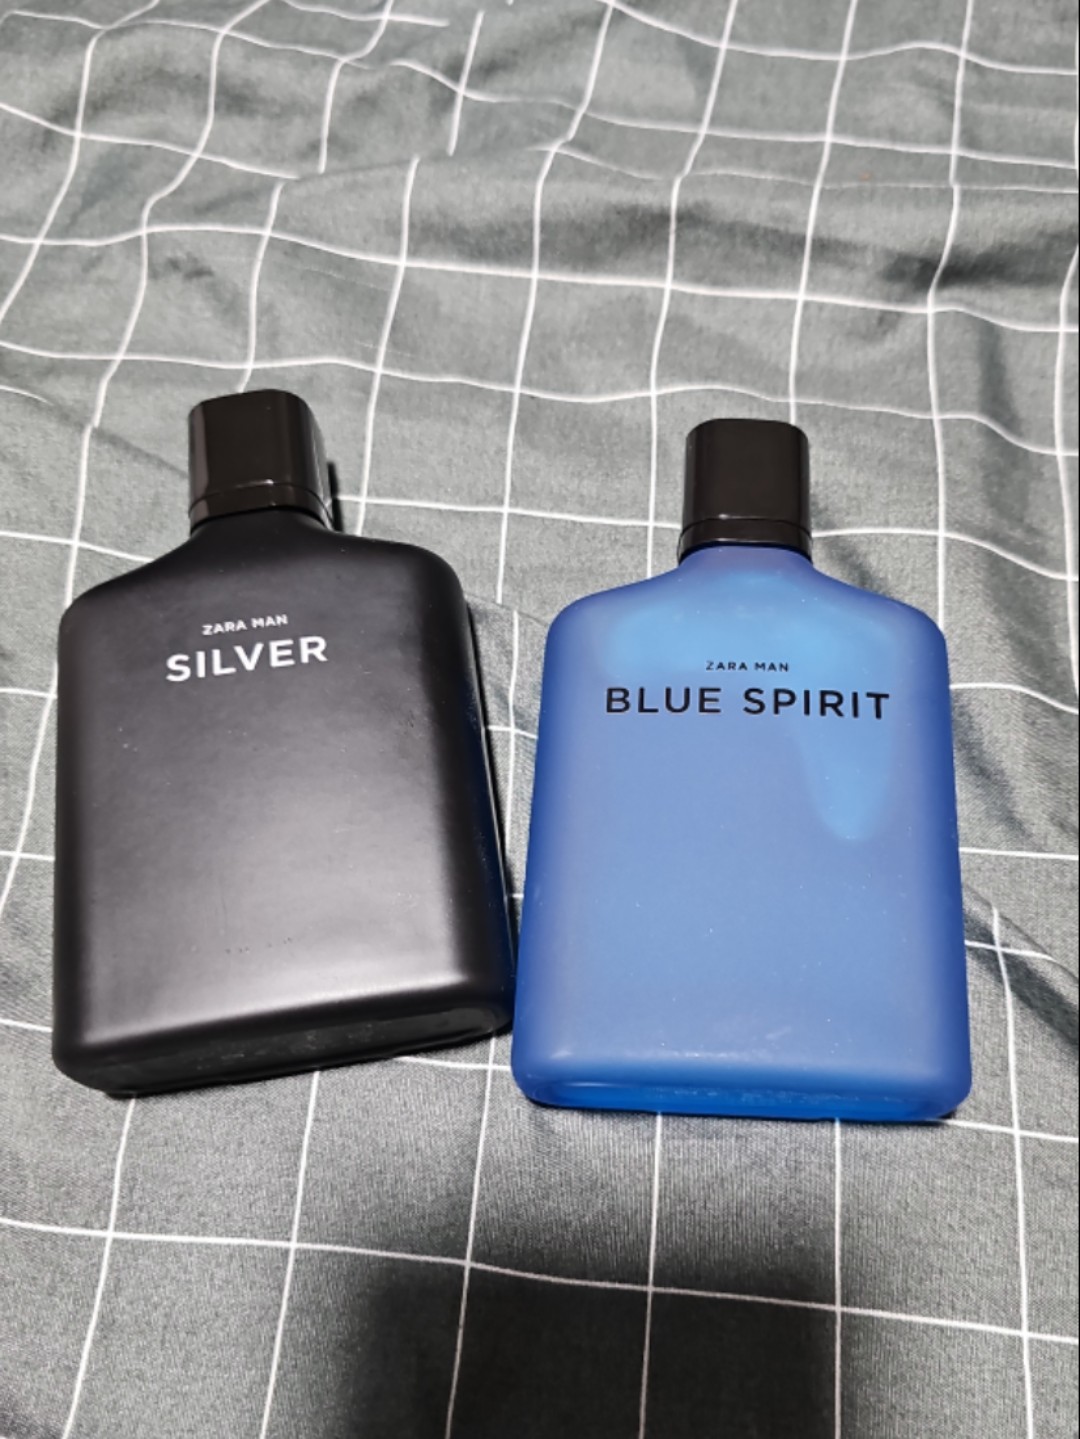 Zara - MAN BLUE SPIRIT + MAN SILVER 100 ML / 3.38 oz